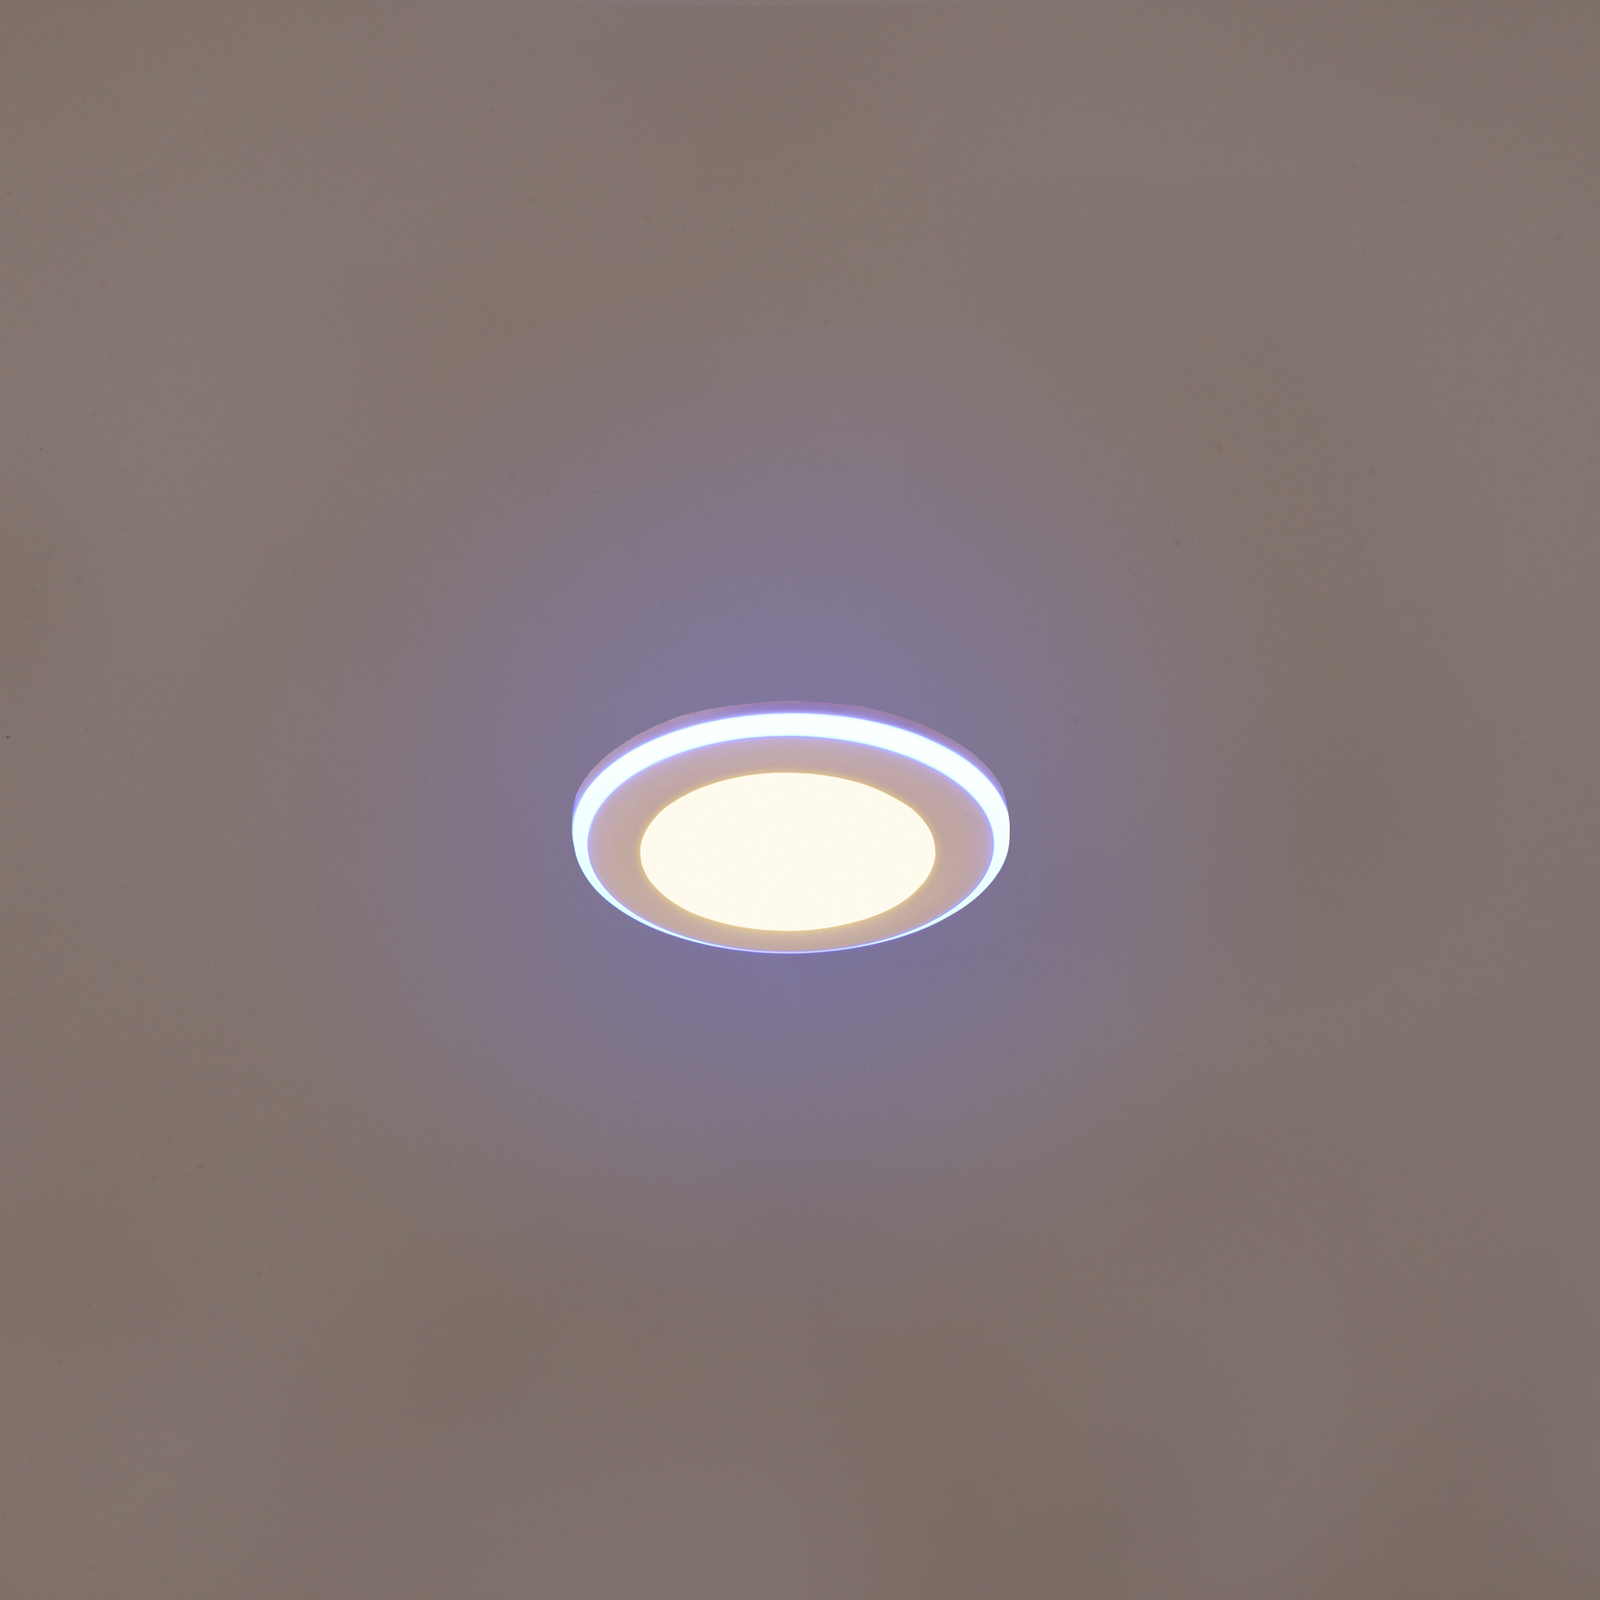 Argus LED downlight RGBW remote Ø 8 cm white